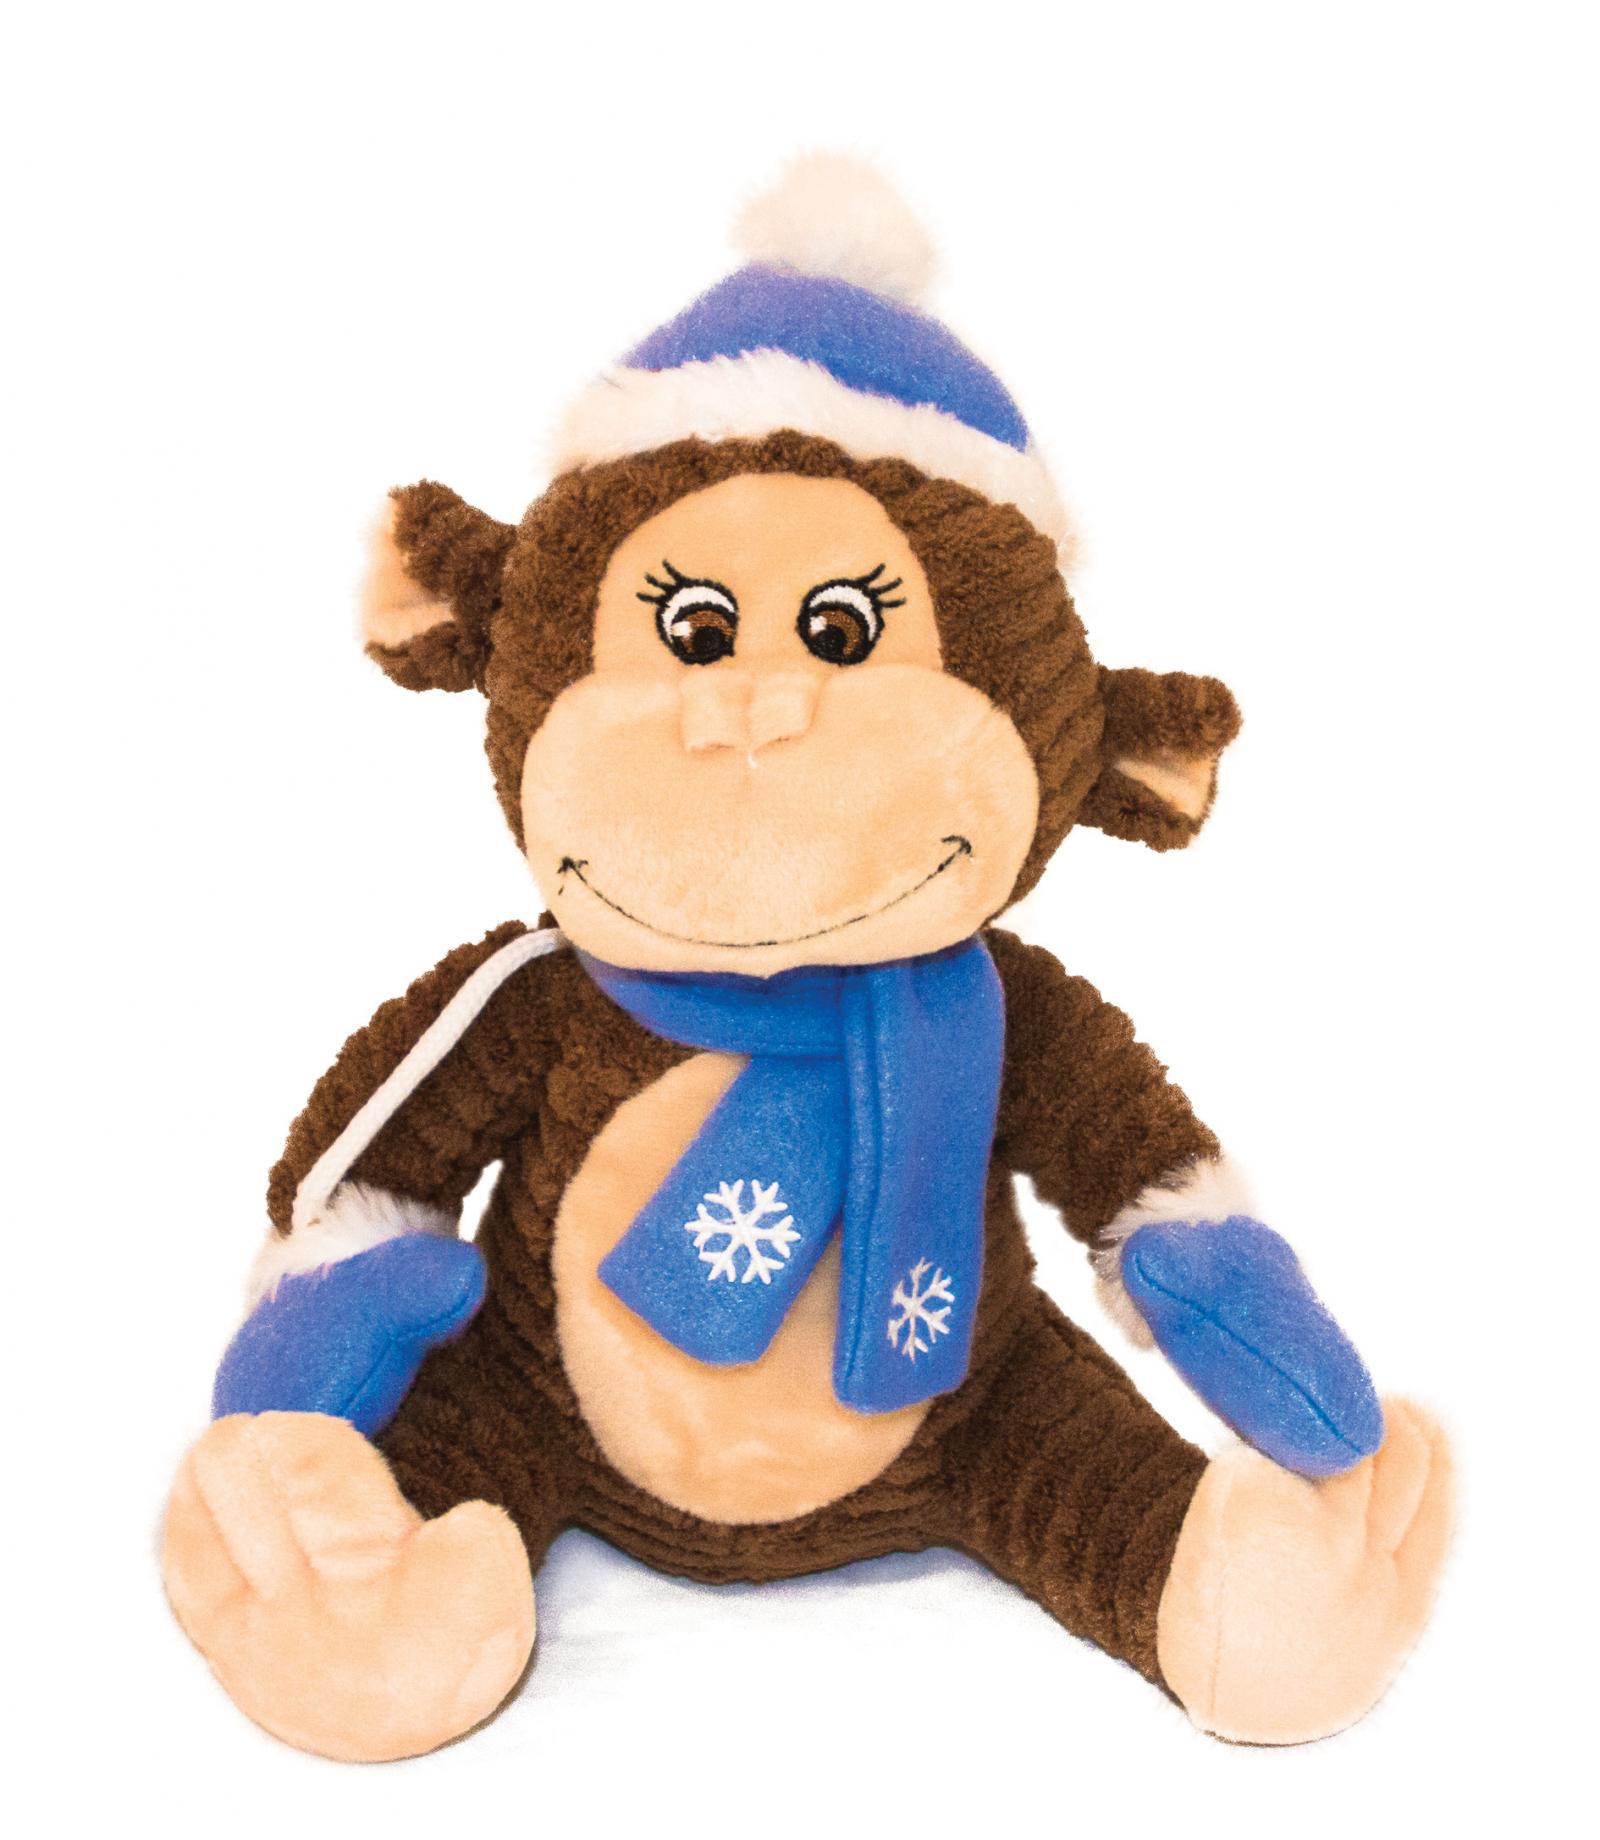 Gullivee® игрушка обезьянка 2015. Гулливер мягкие игрушки обезьяна. Мягкая игрушка «снежок», 20 см. Гулливер и обезьяна.